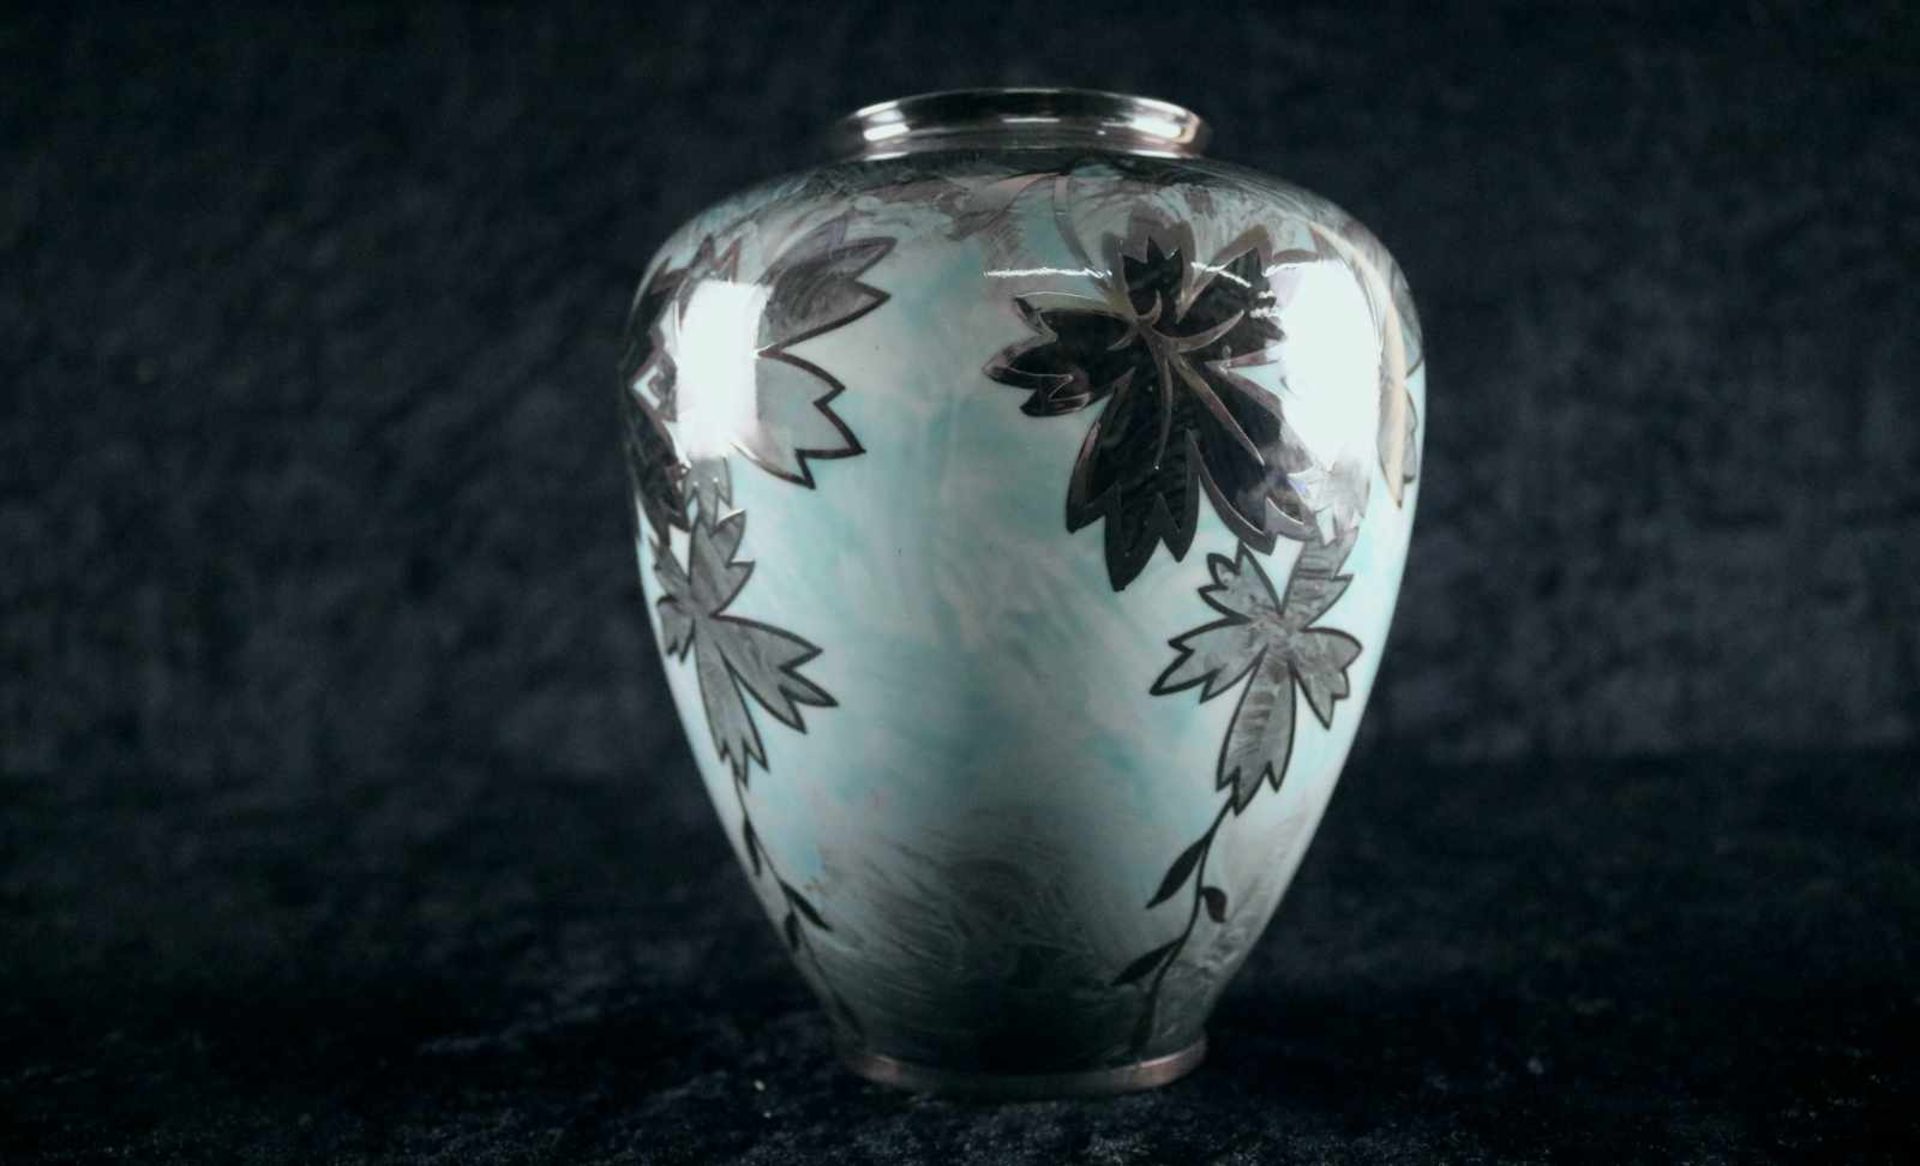 Porzellanmanufraktur Jäger & Co, PmR Bayern, türkise Vase mit schwarzen Ahornblätter, 1950-90 Made - Image 4 of 5